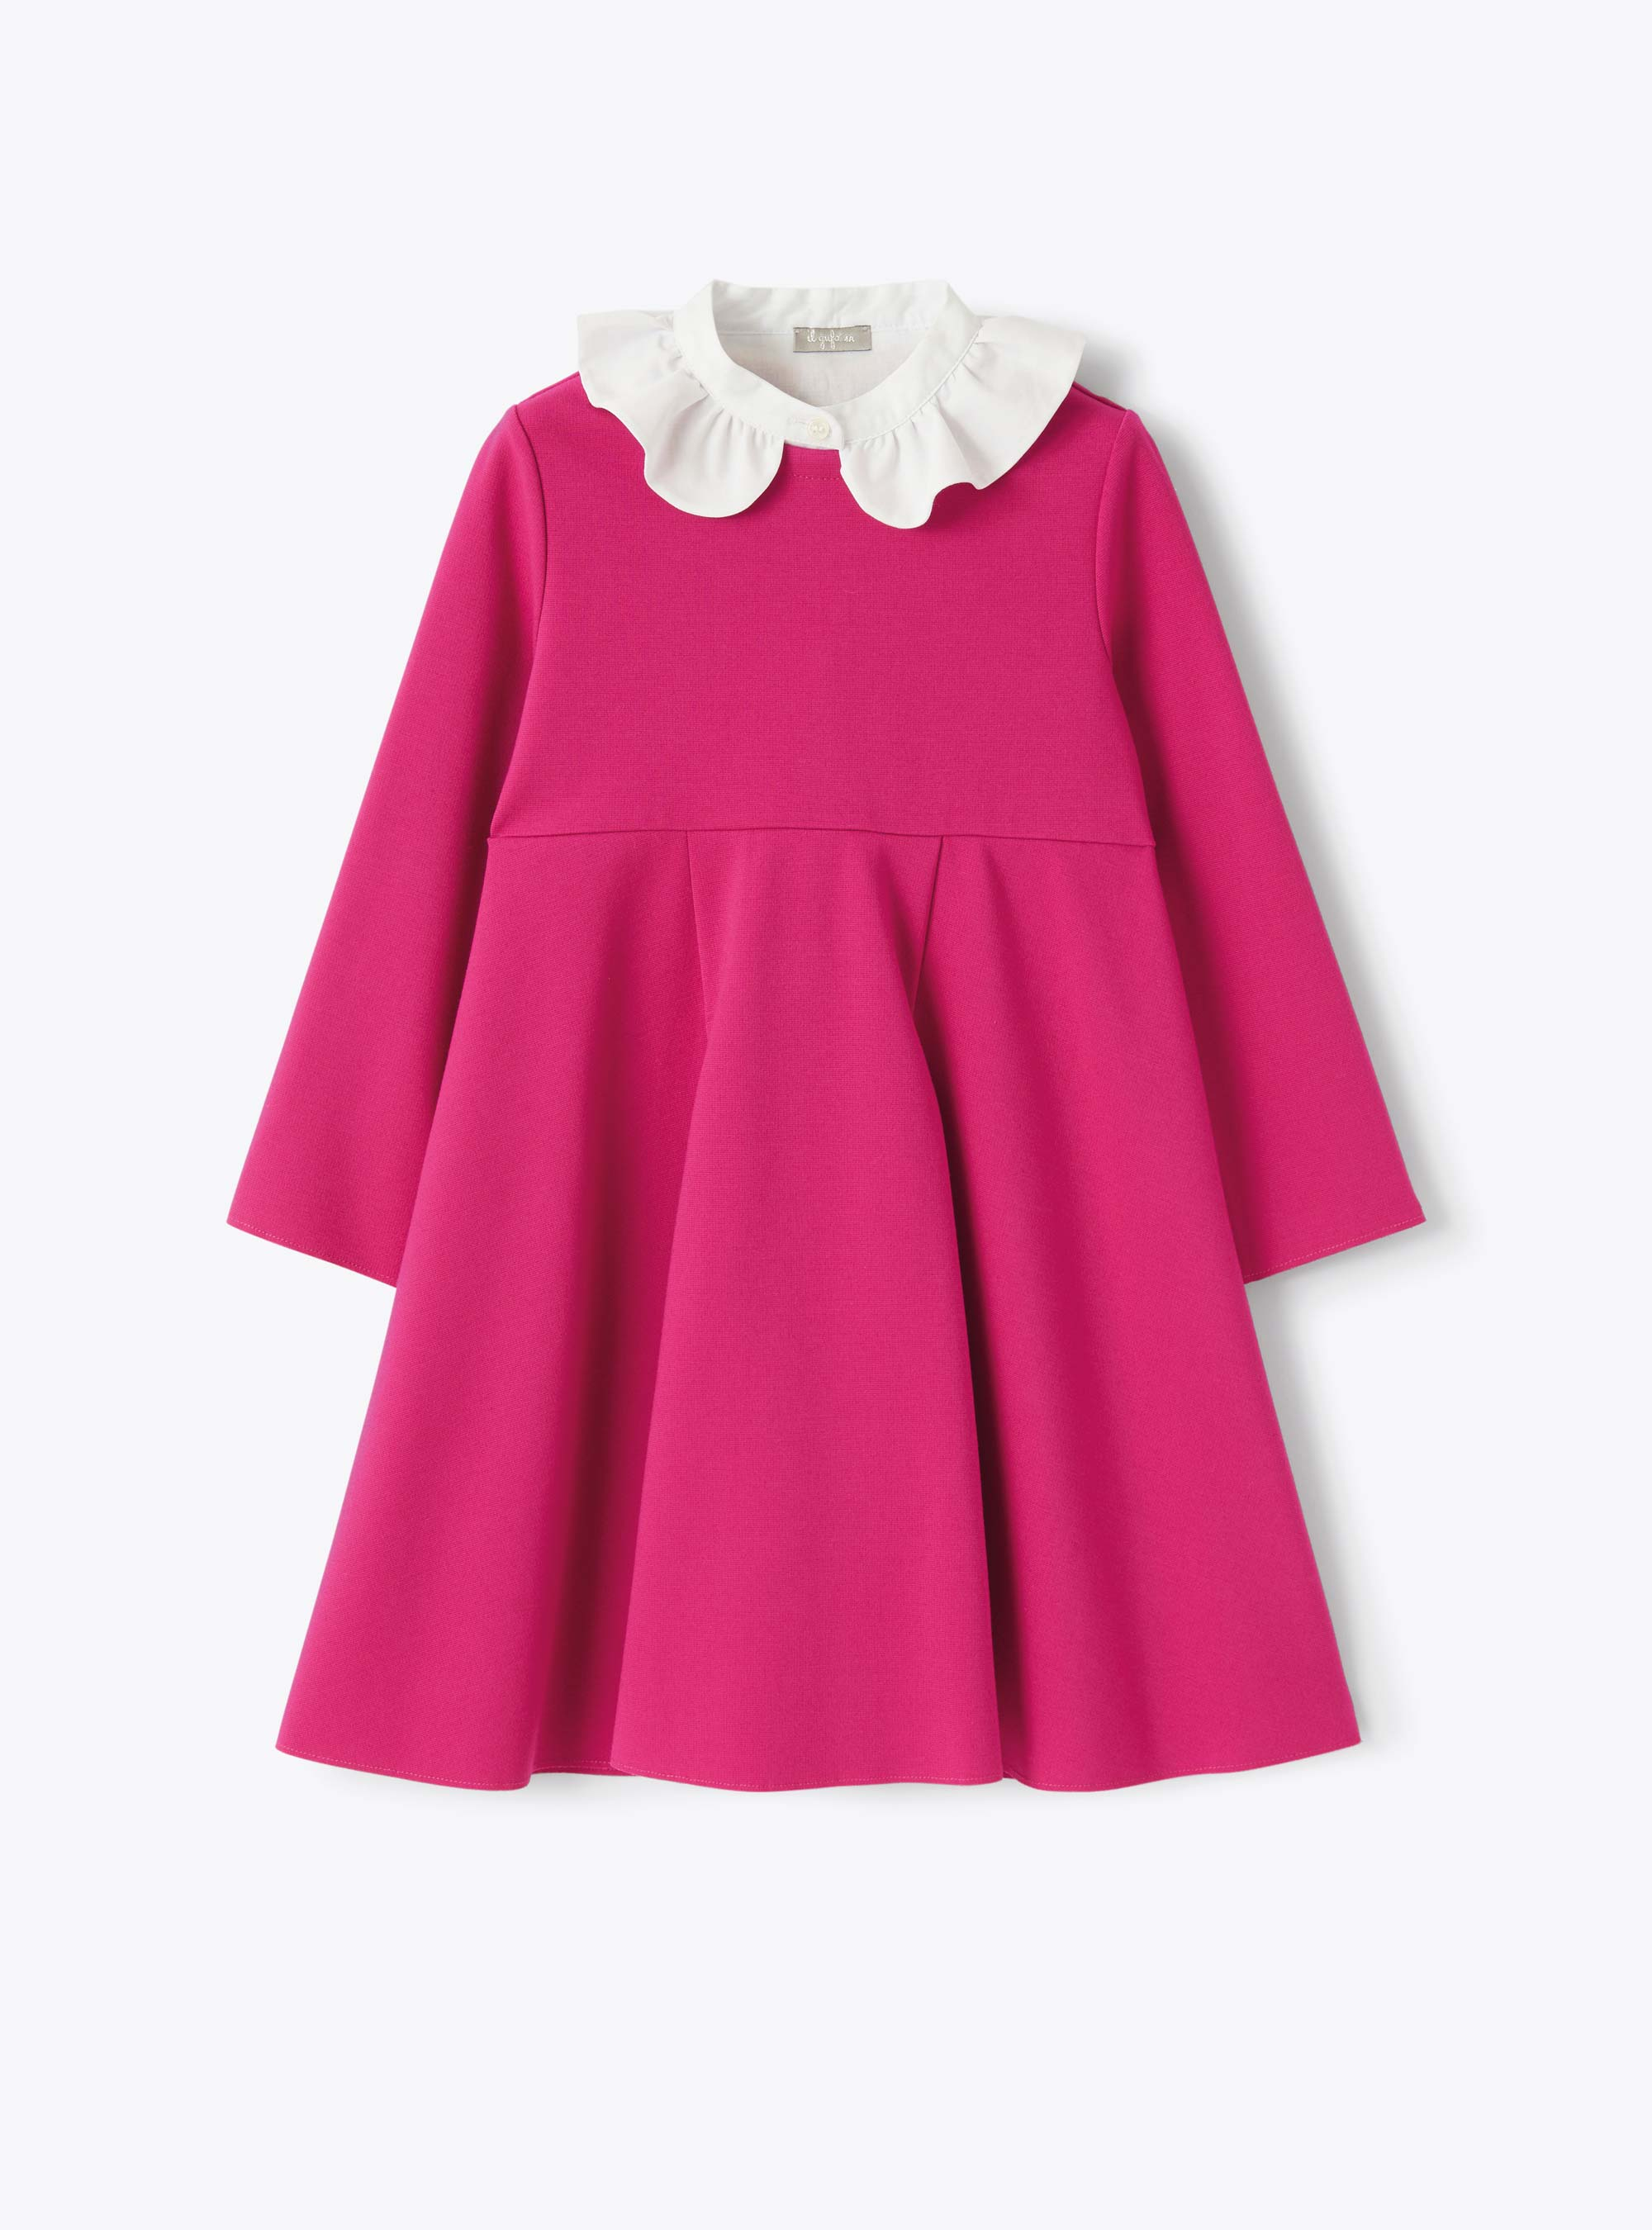 Dress in fuchsia-pink Milano-stitch fabric - Dresses - Il Gufo